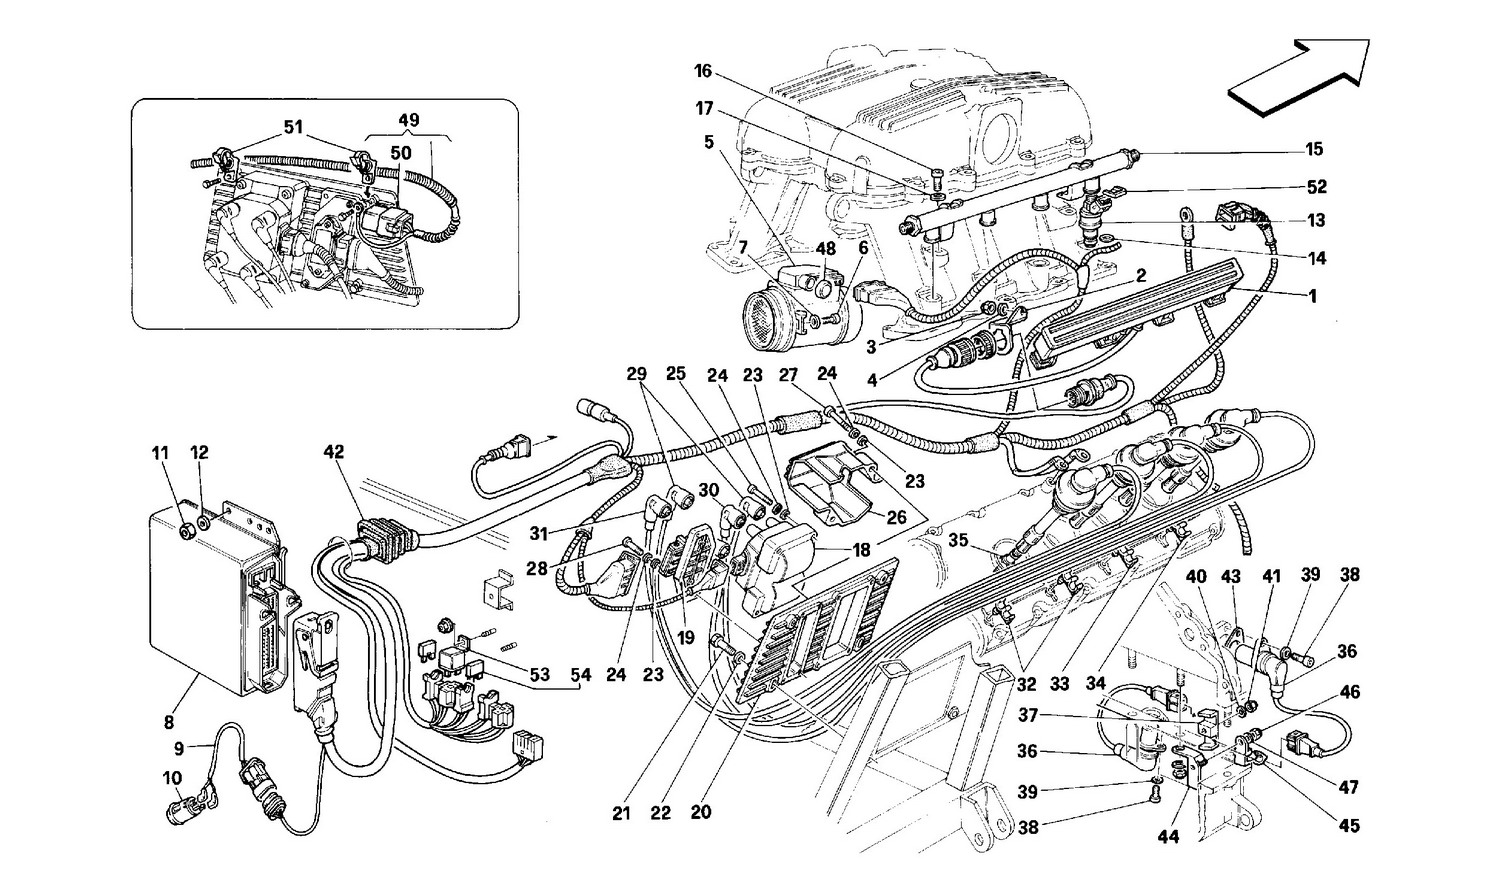 Schematic: Engine Ignition -Motronic 2.7-